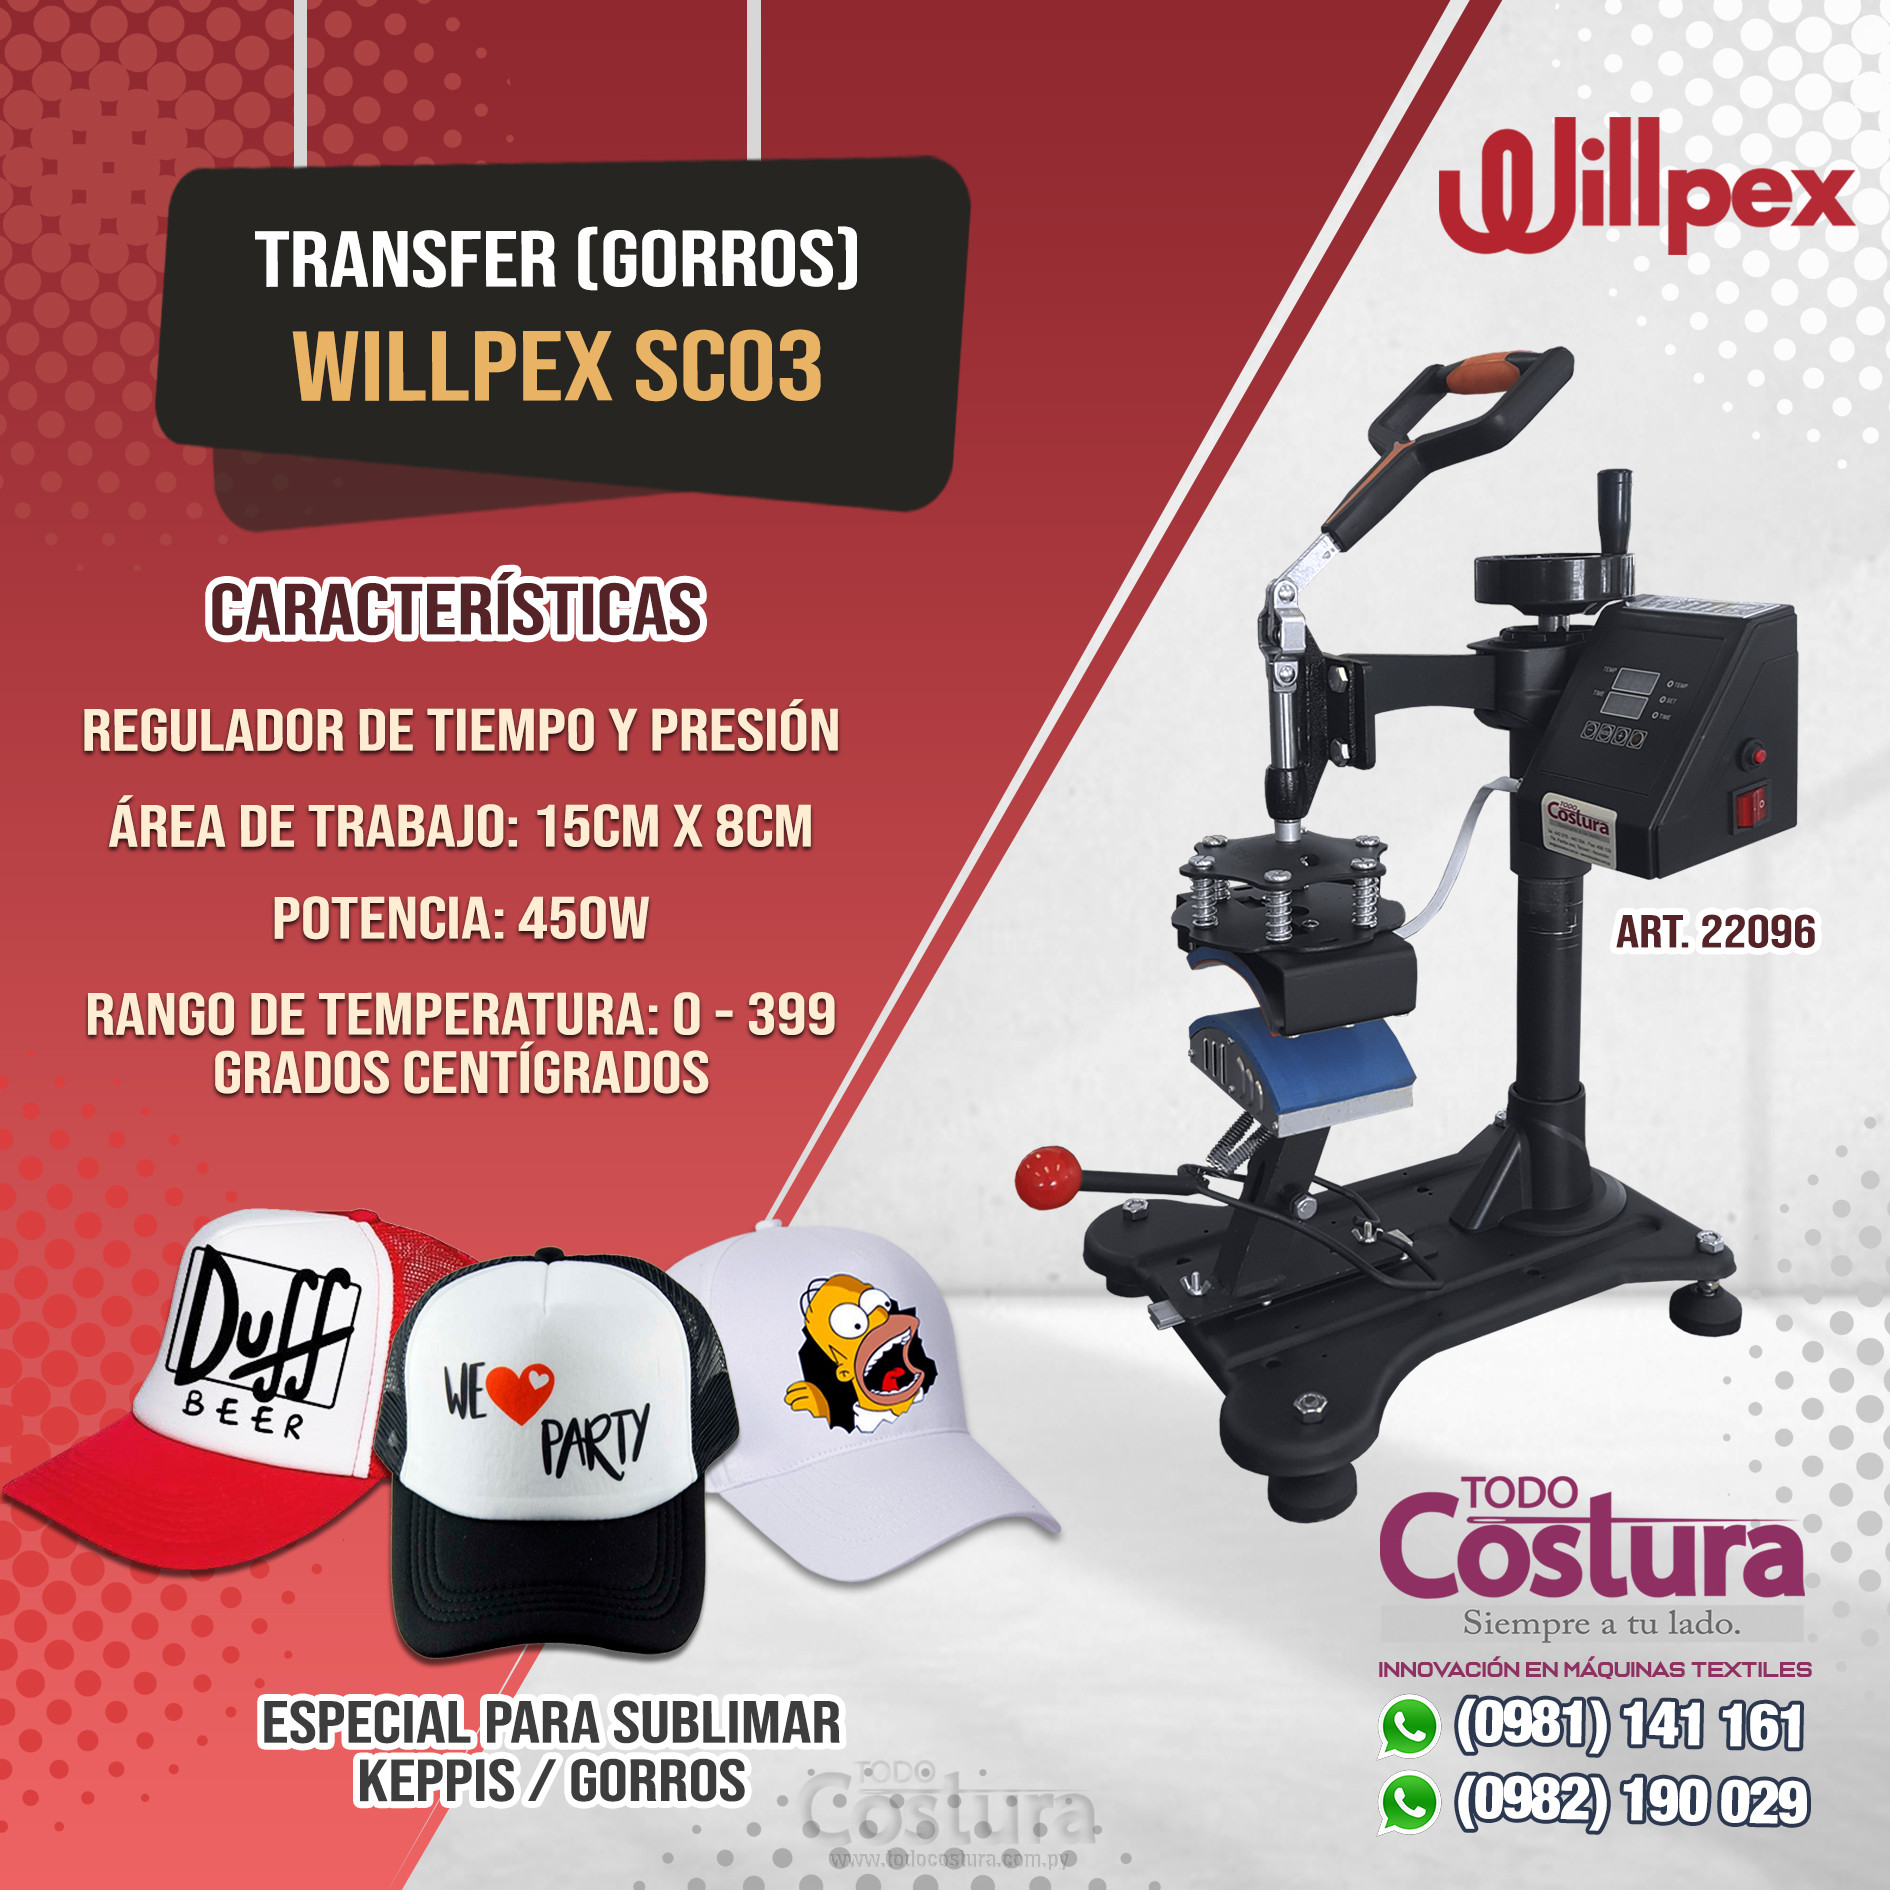 TRANSFER (GORROS) WILLPEX SC03